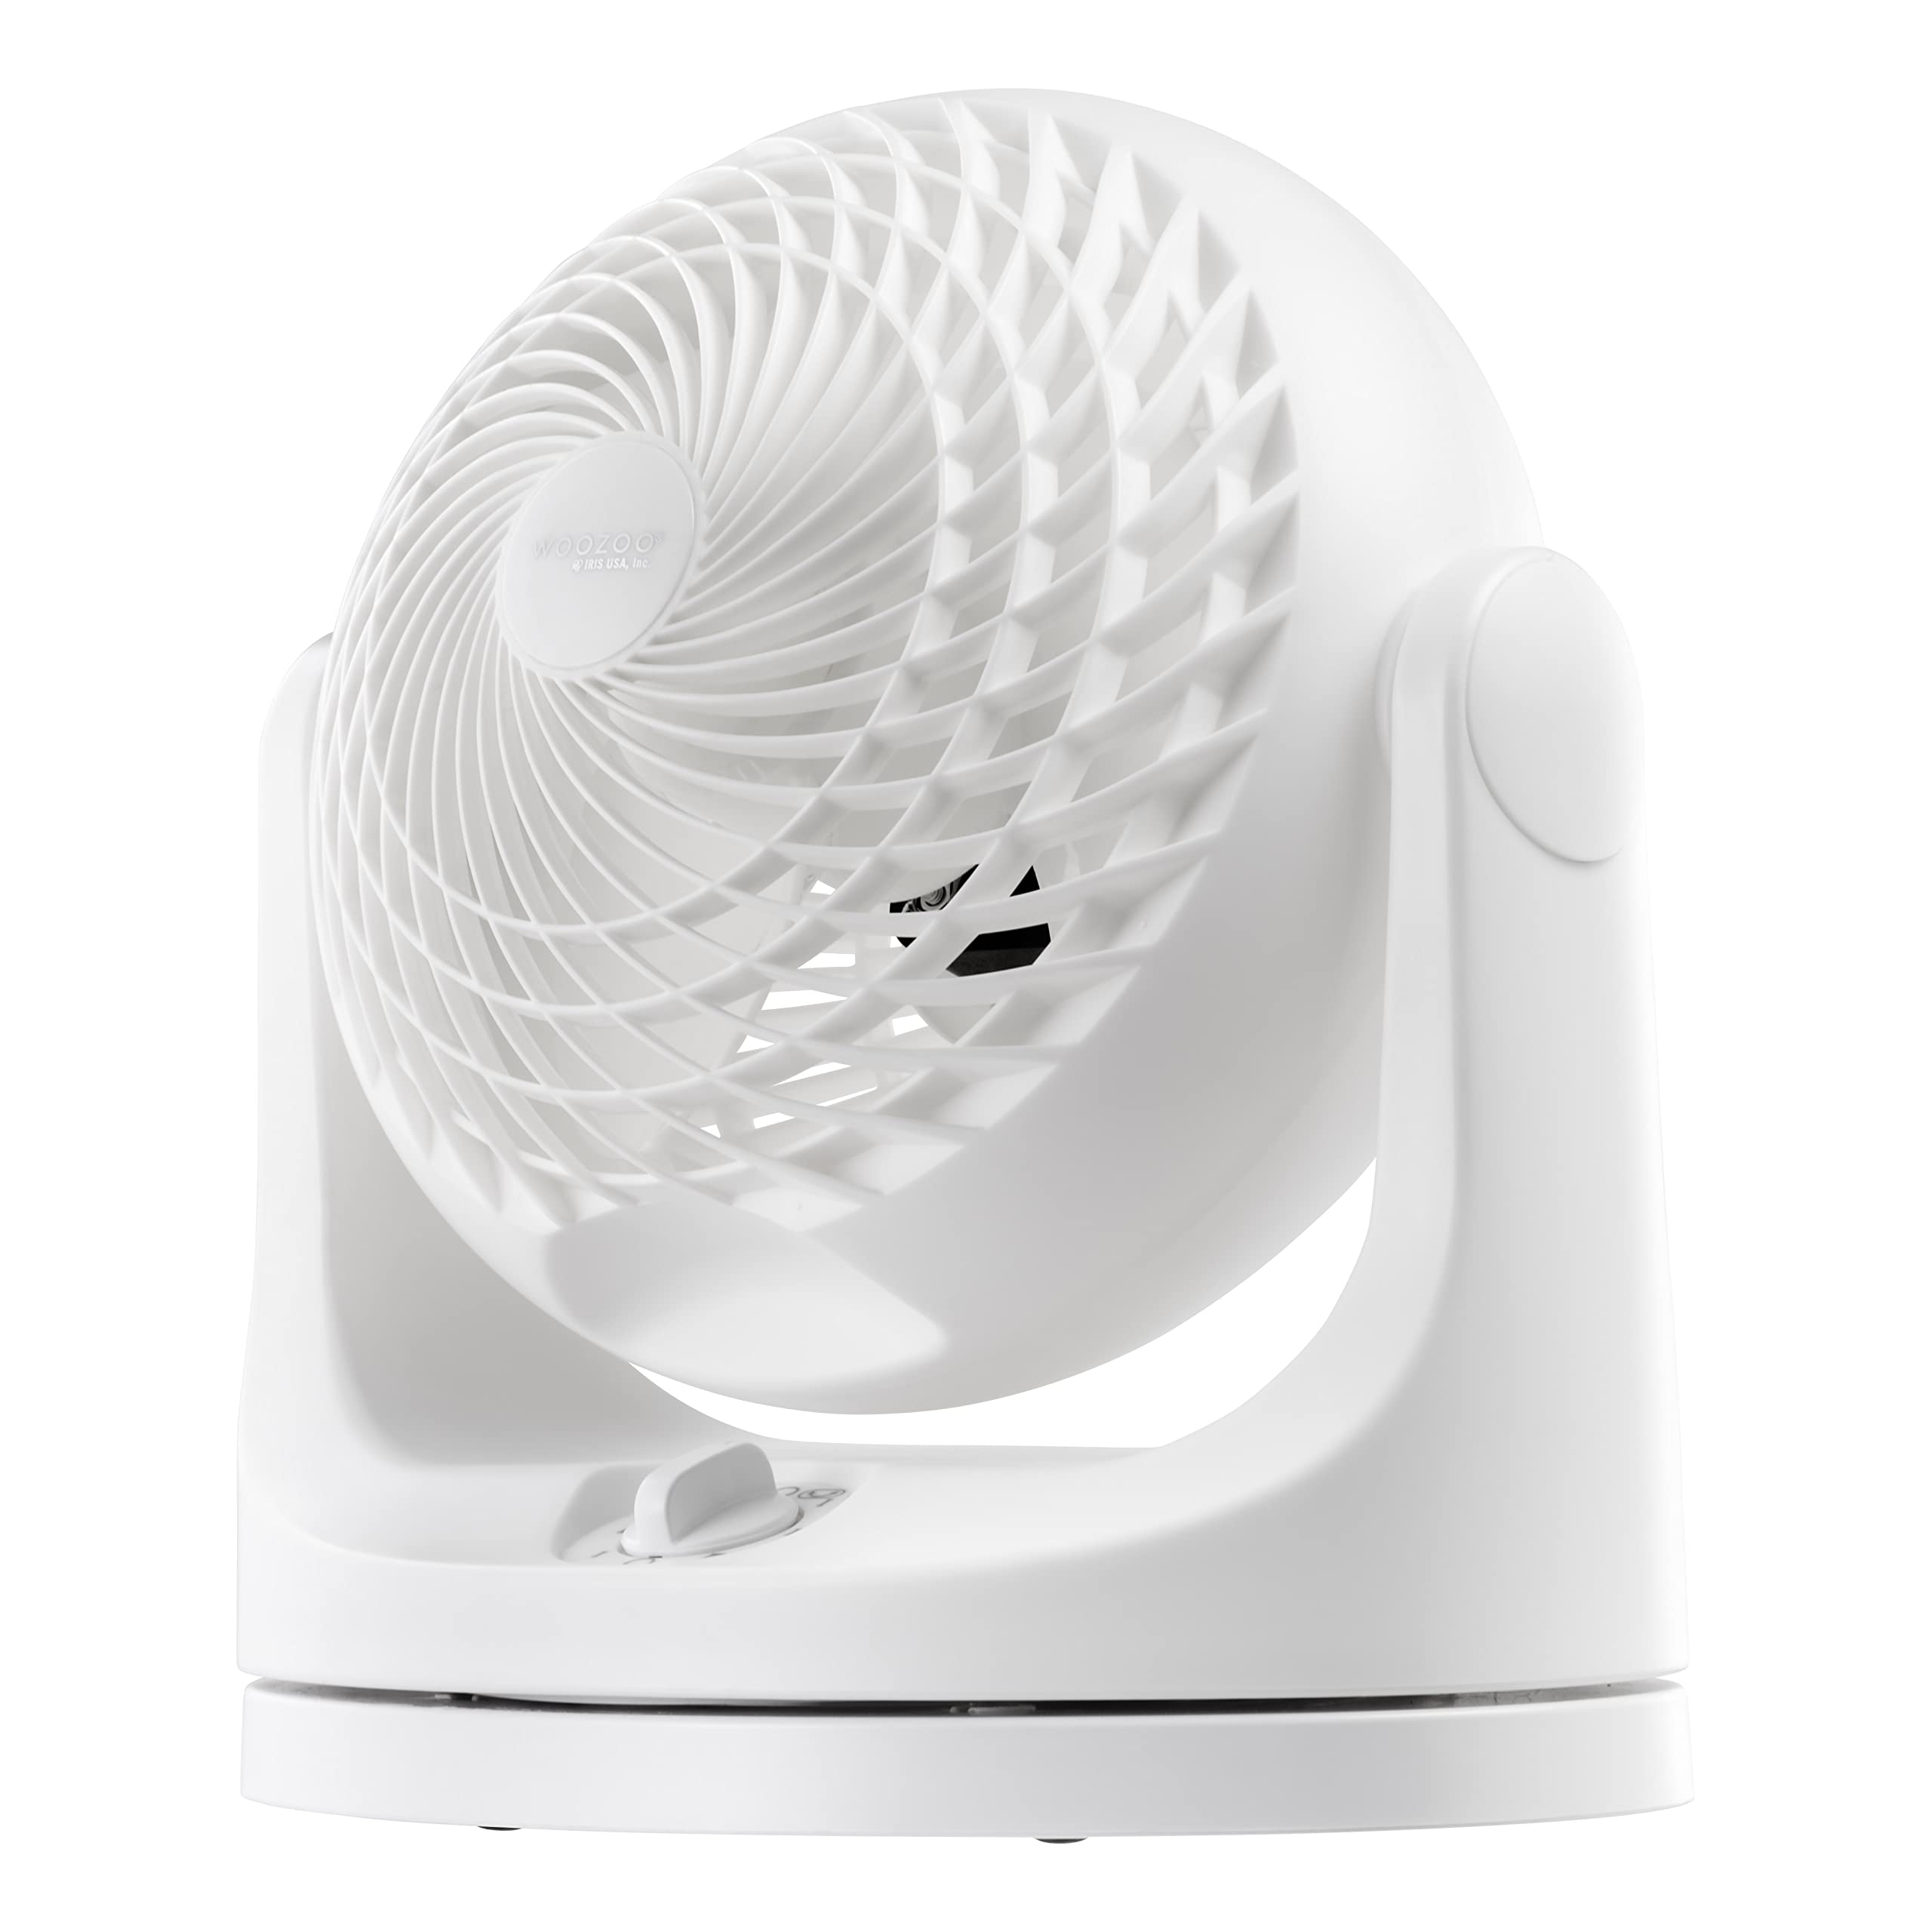 IRIS USA WOOZOO Oscillating Fan, Vortex Fan, Air Circulator, Desk Fan, Portable Fan, 3 Speed Settings, 7 Tilting Head Settings, 52ft Max Air Distance, Large, White